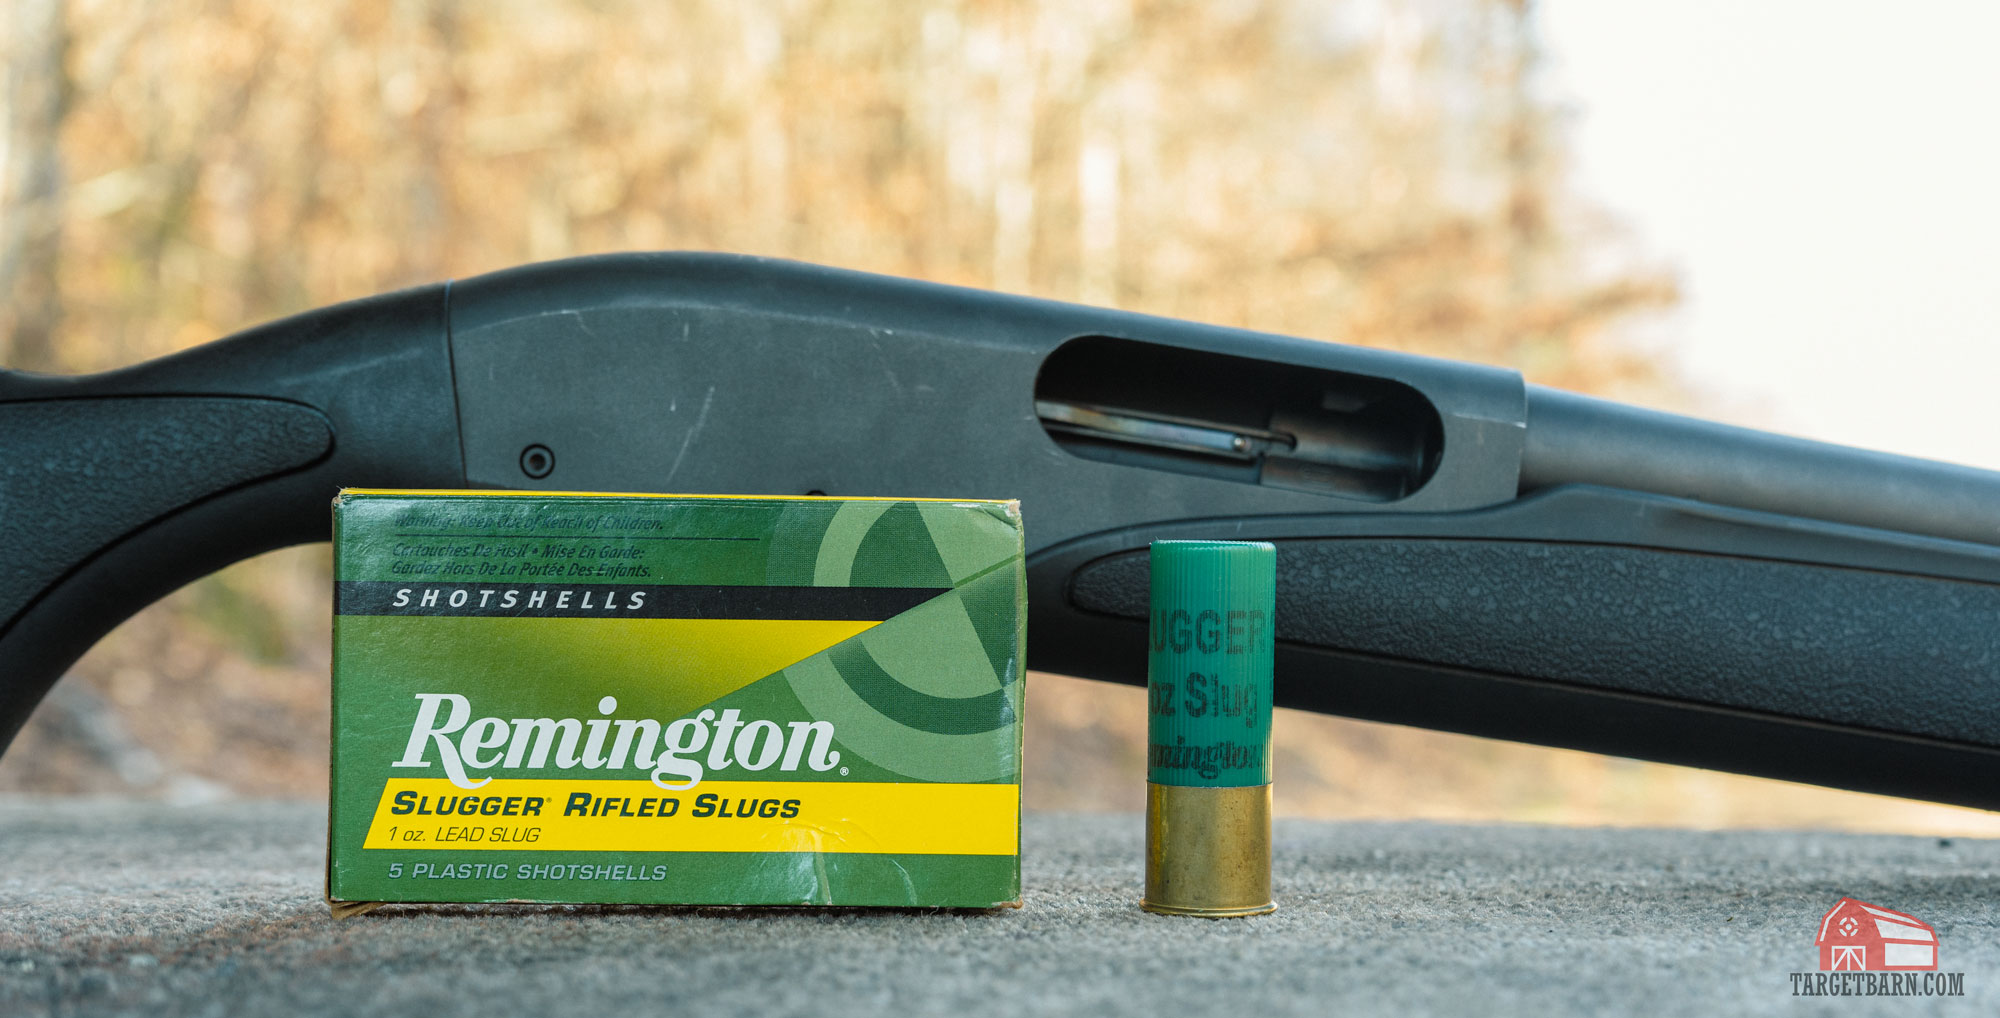 remington slugger rigled slugs and shotgun at the range